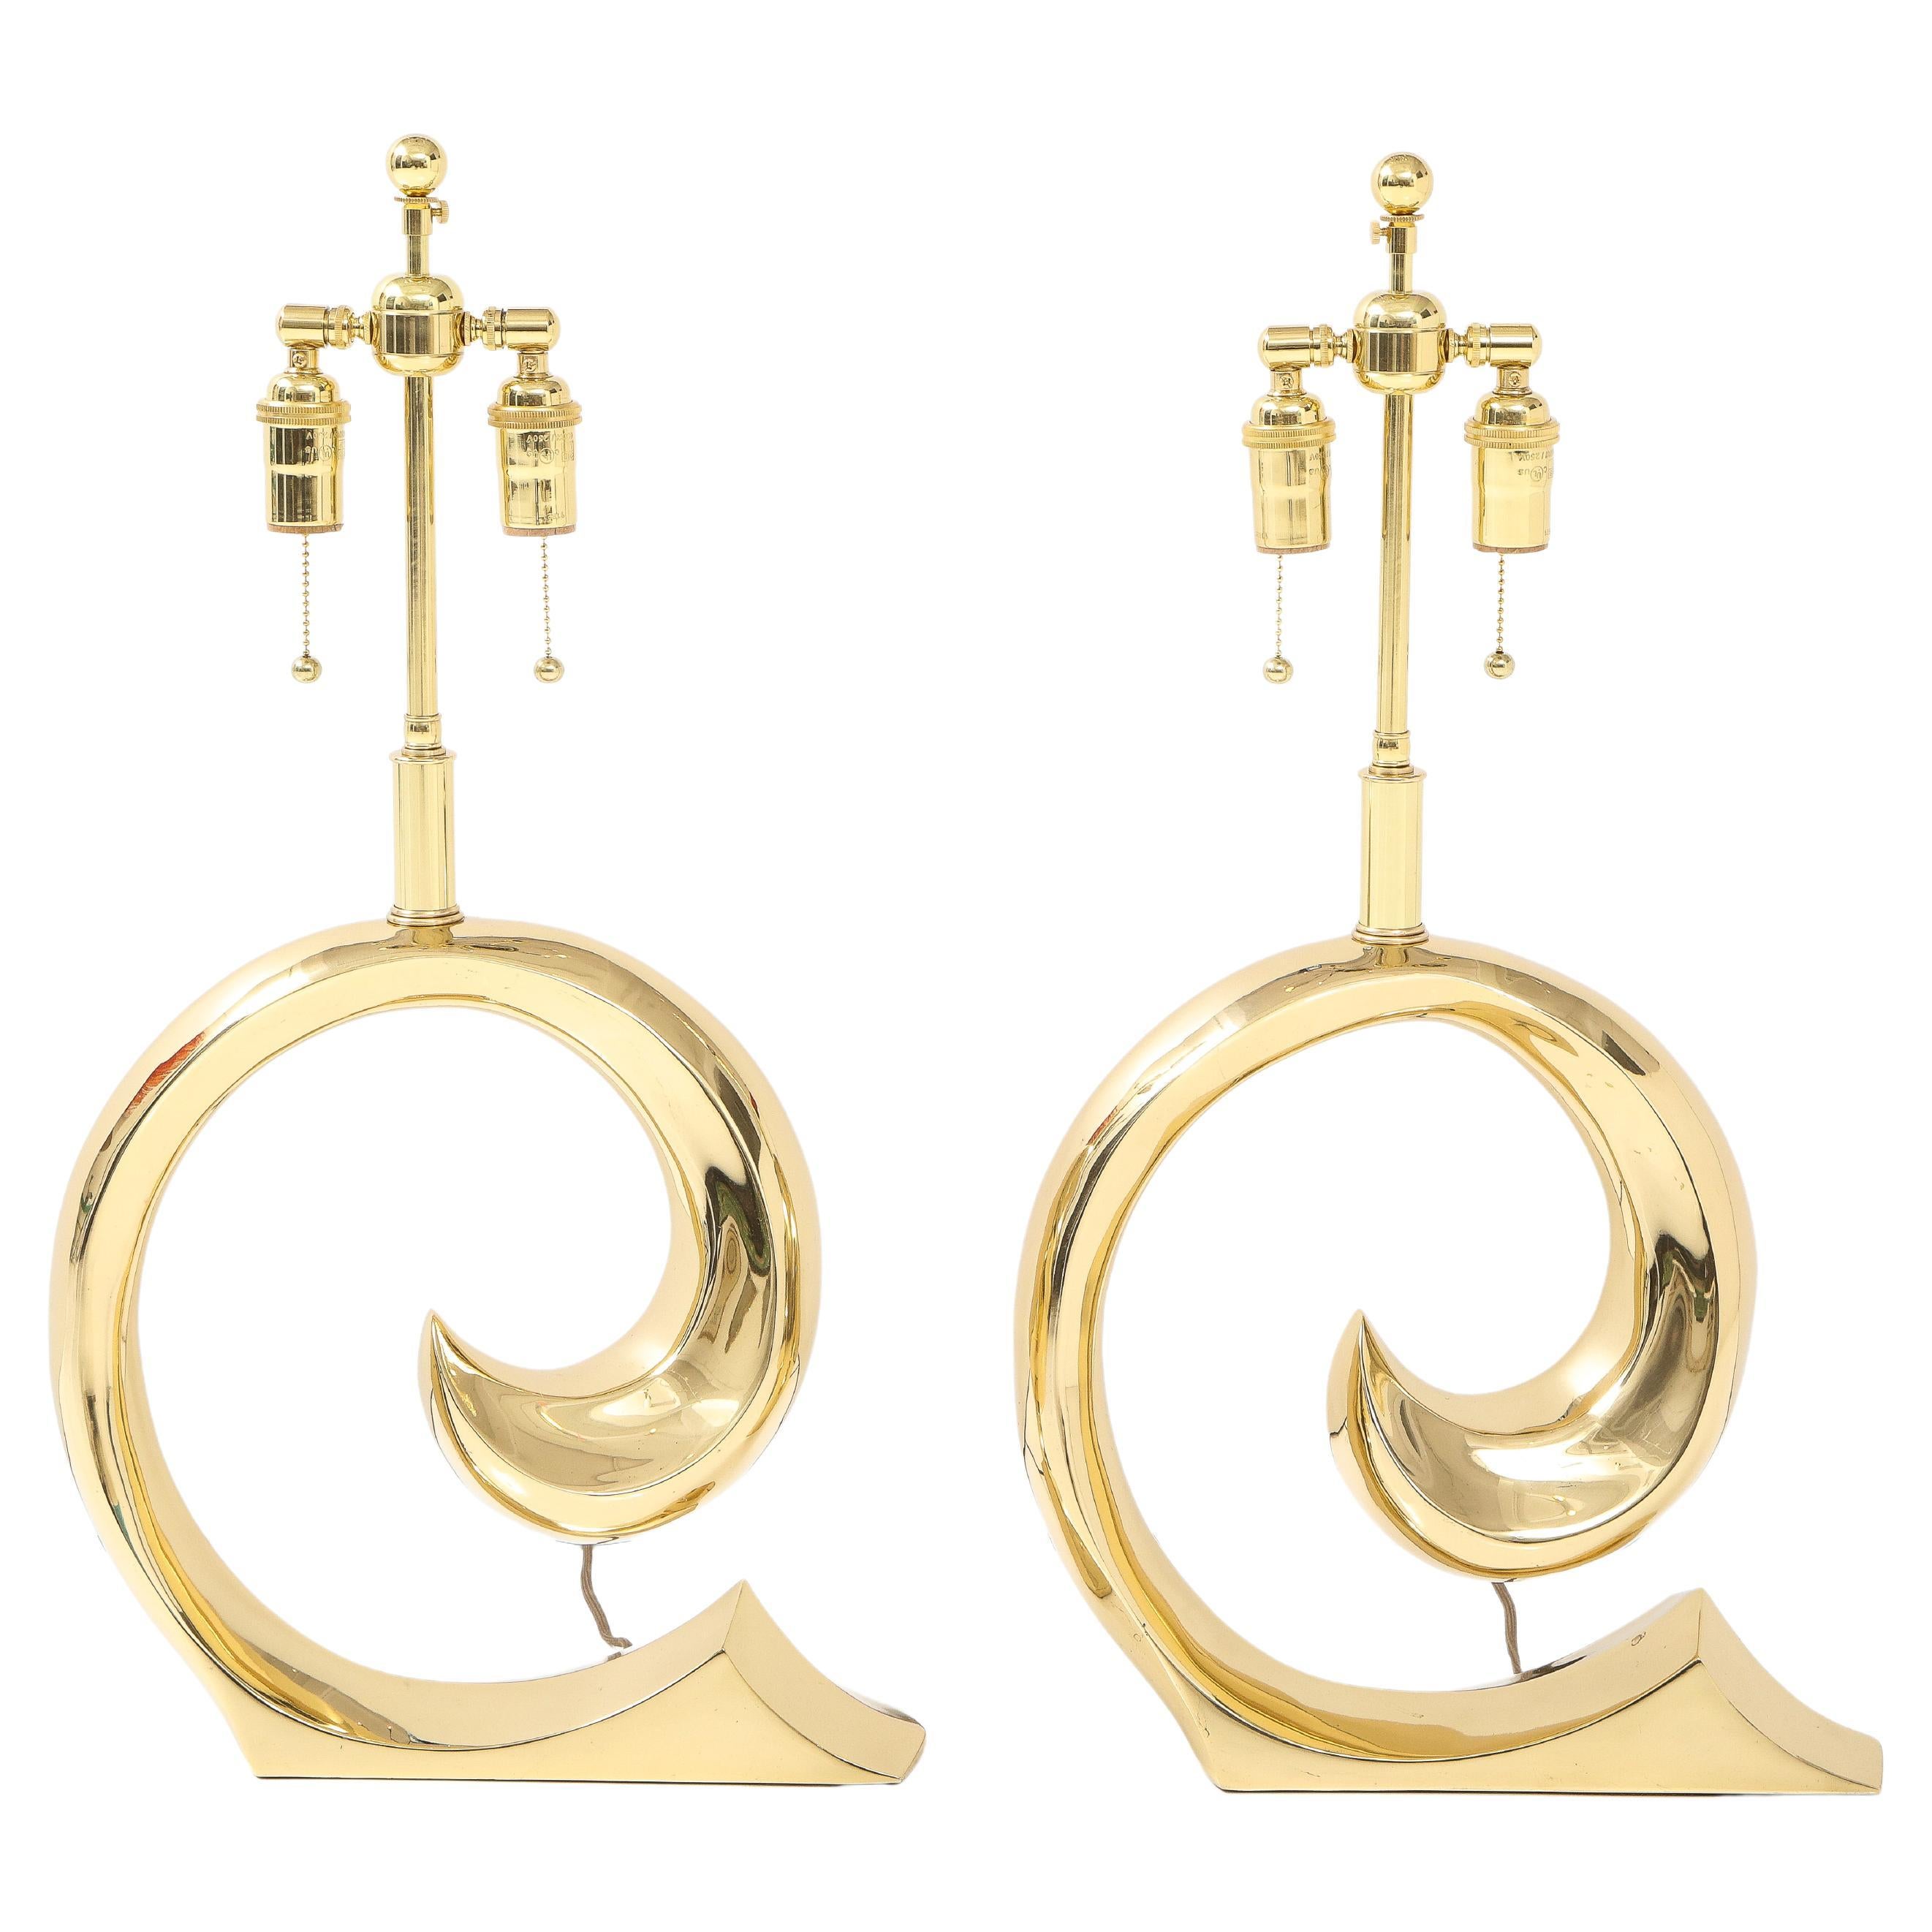 Pair of Polished Brass Pierre Cardin Logo Lamps by Erwin Lambeth